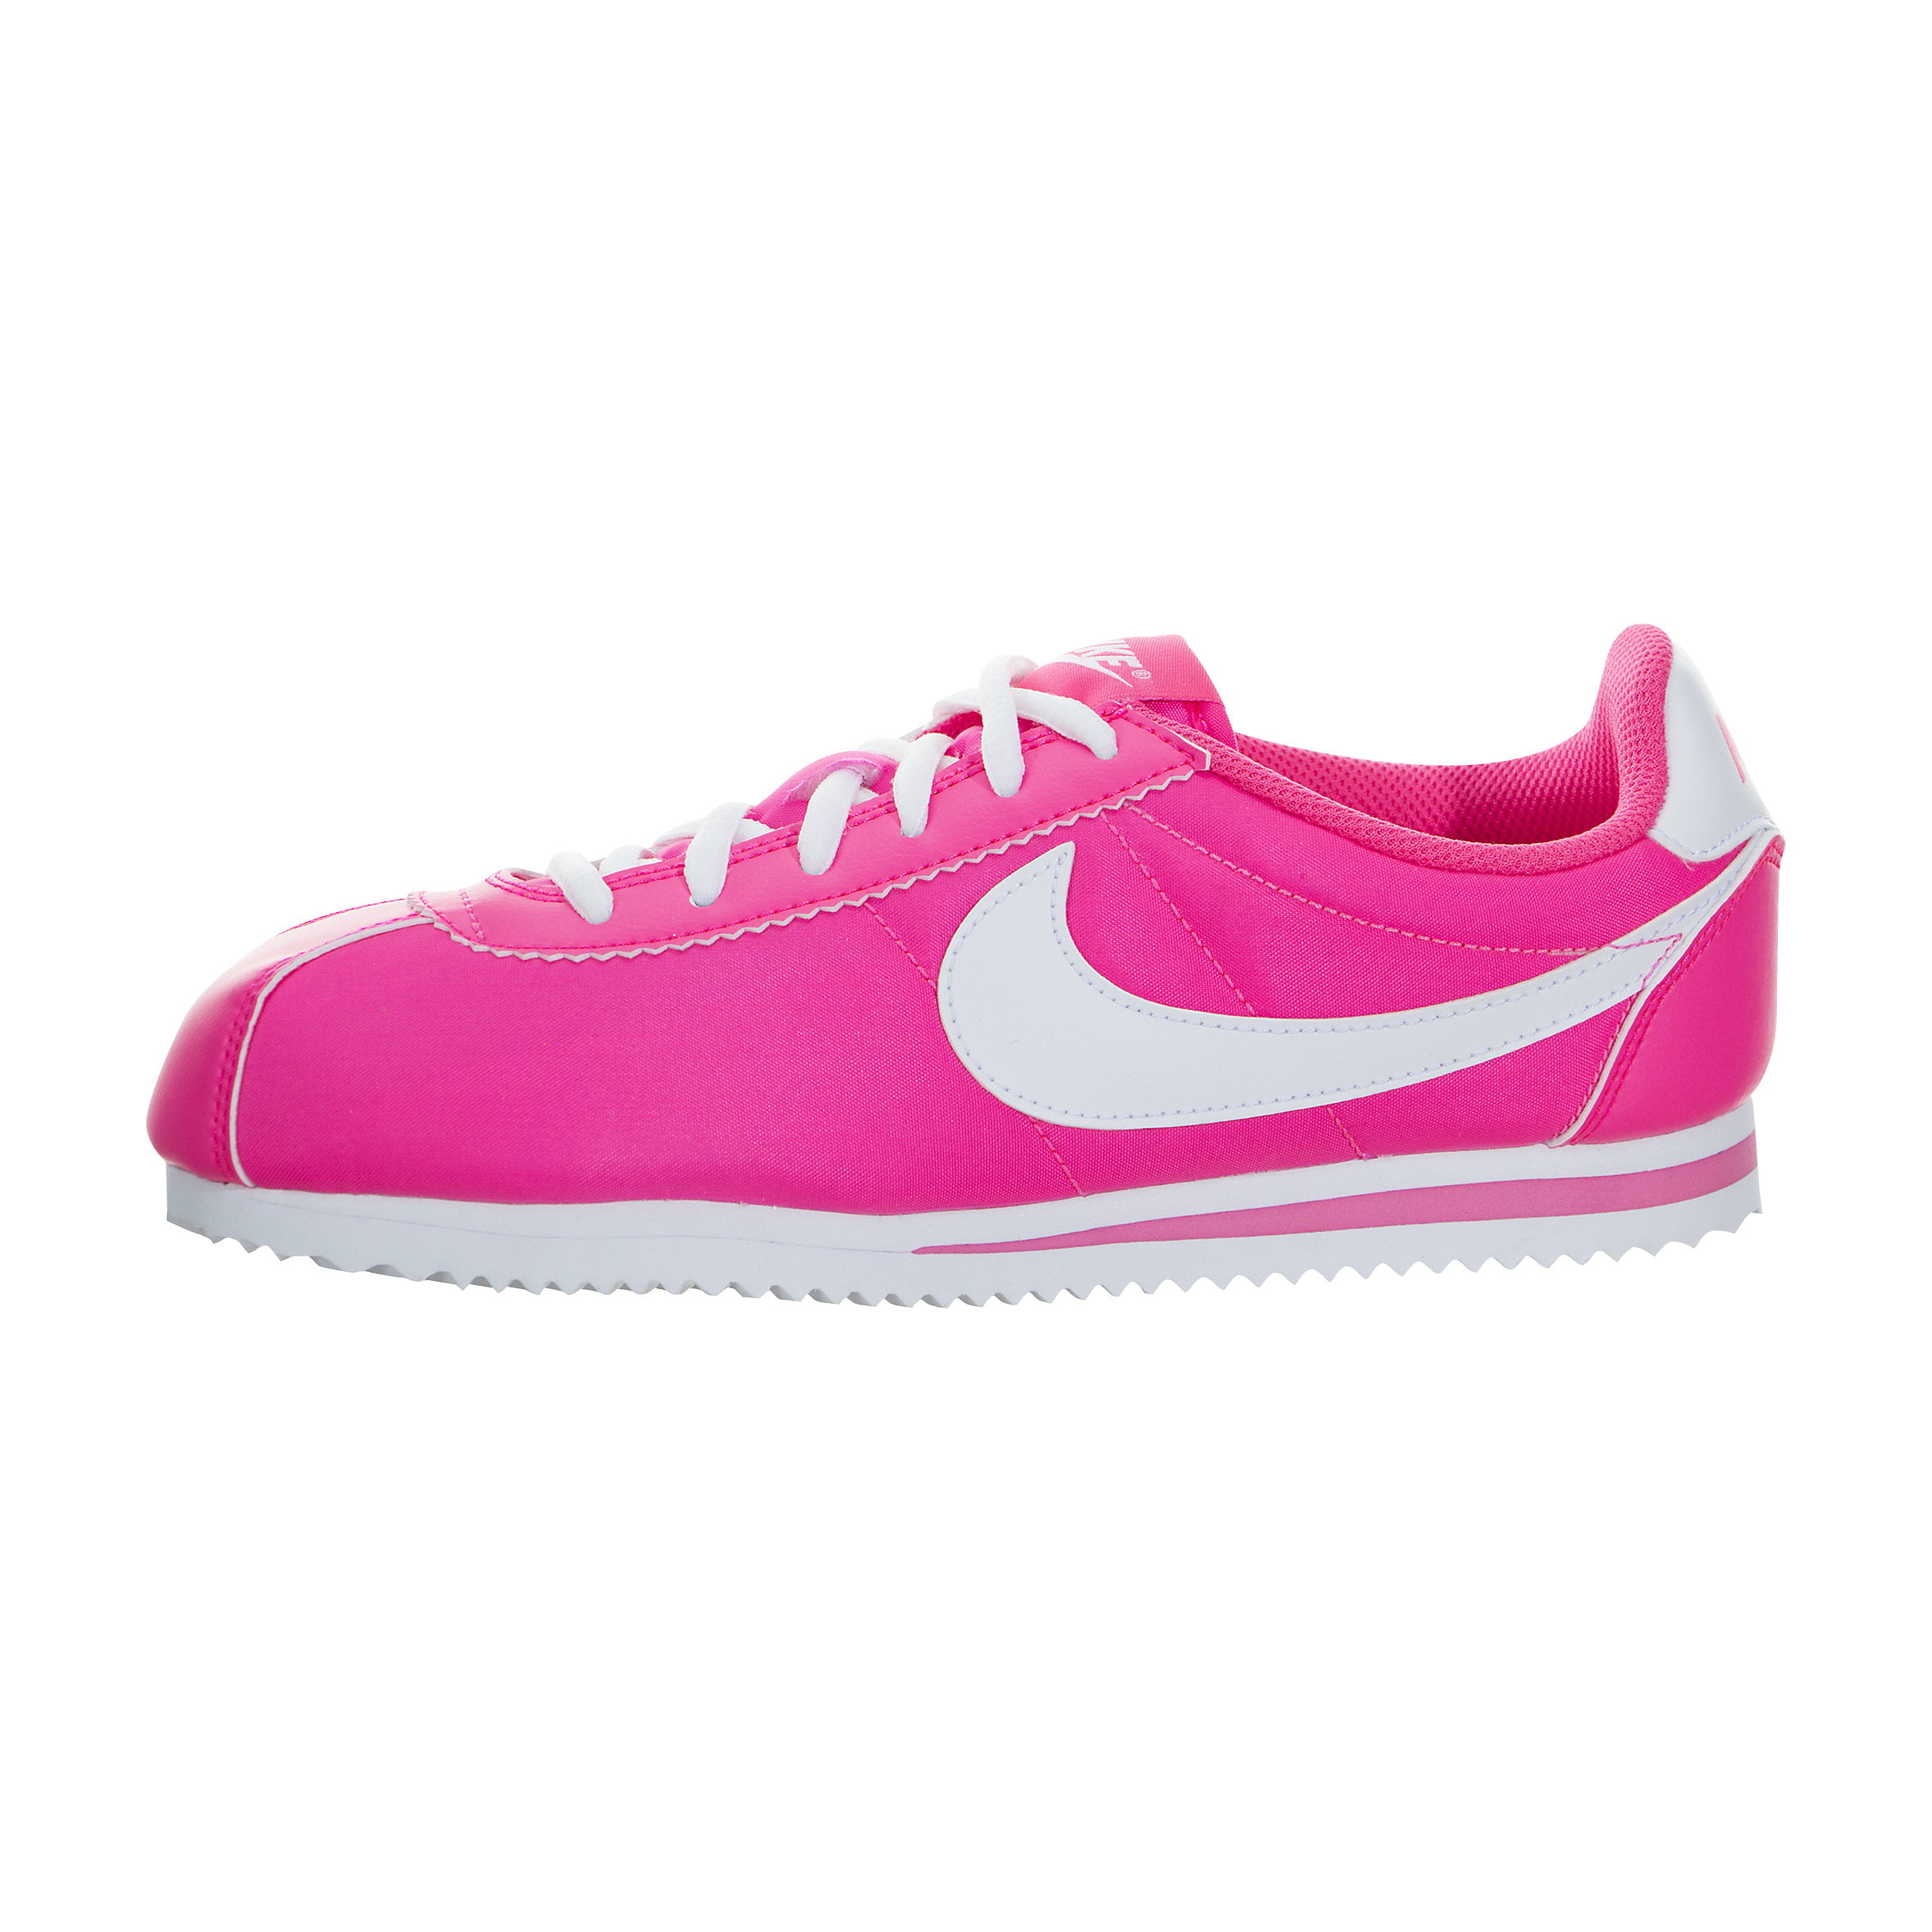 Nike Cortez Nylon Shoes Pink - Walmart.com